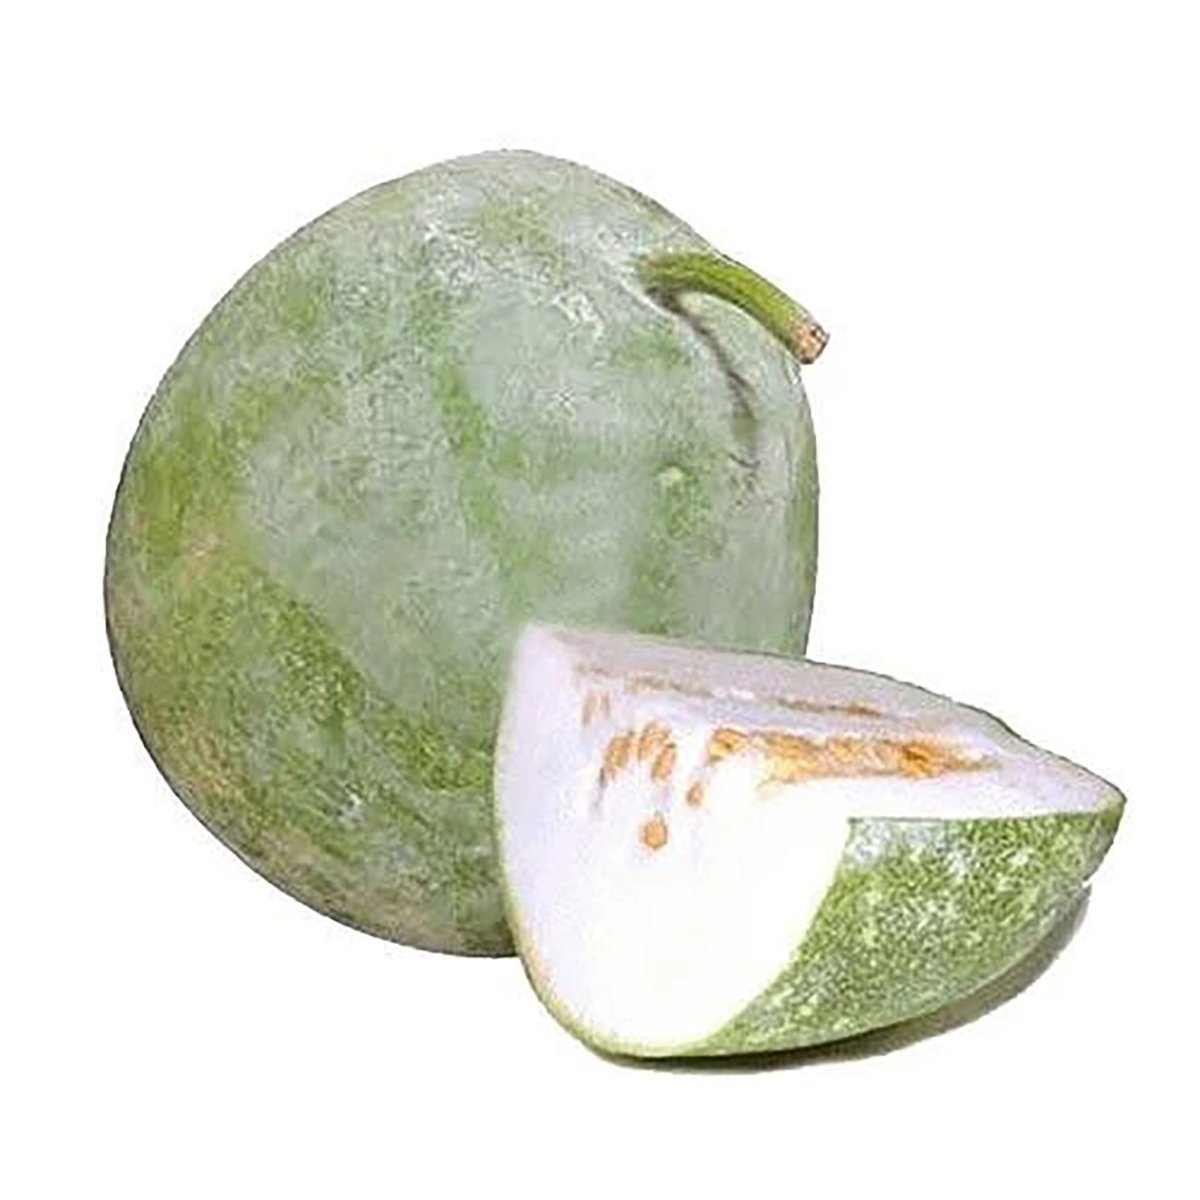 Winter Melon(ash guard) 1Kg Approx Weight